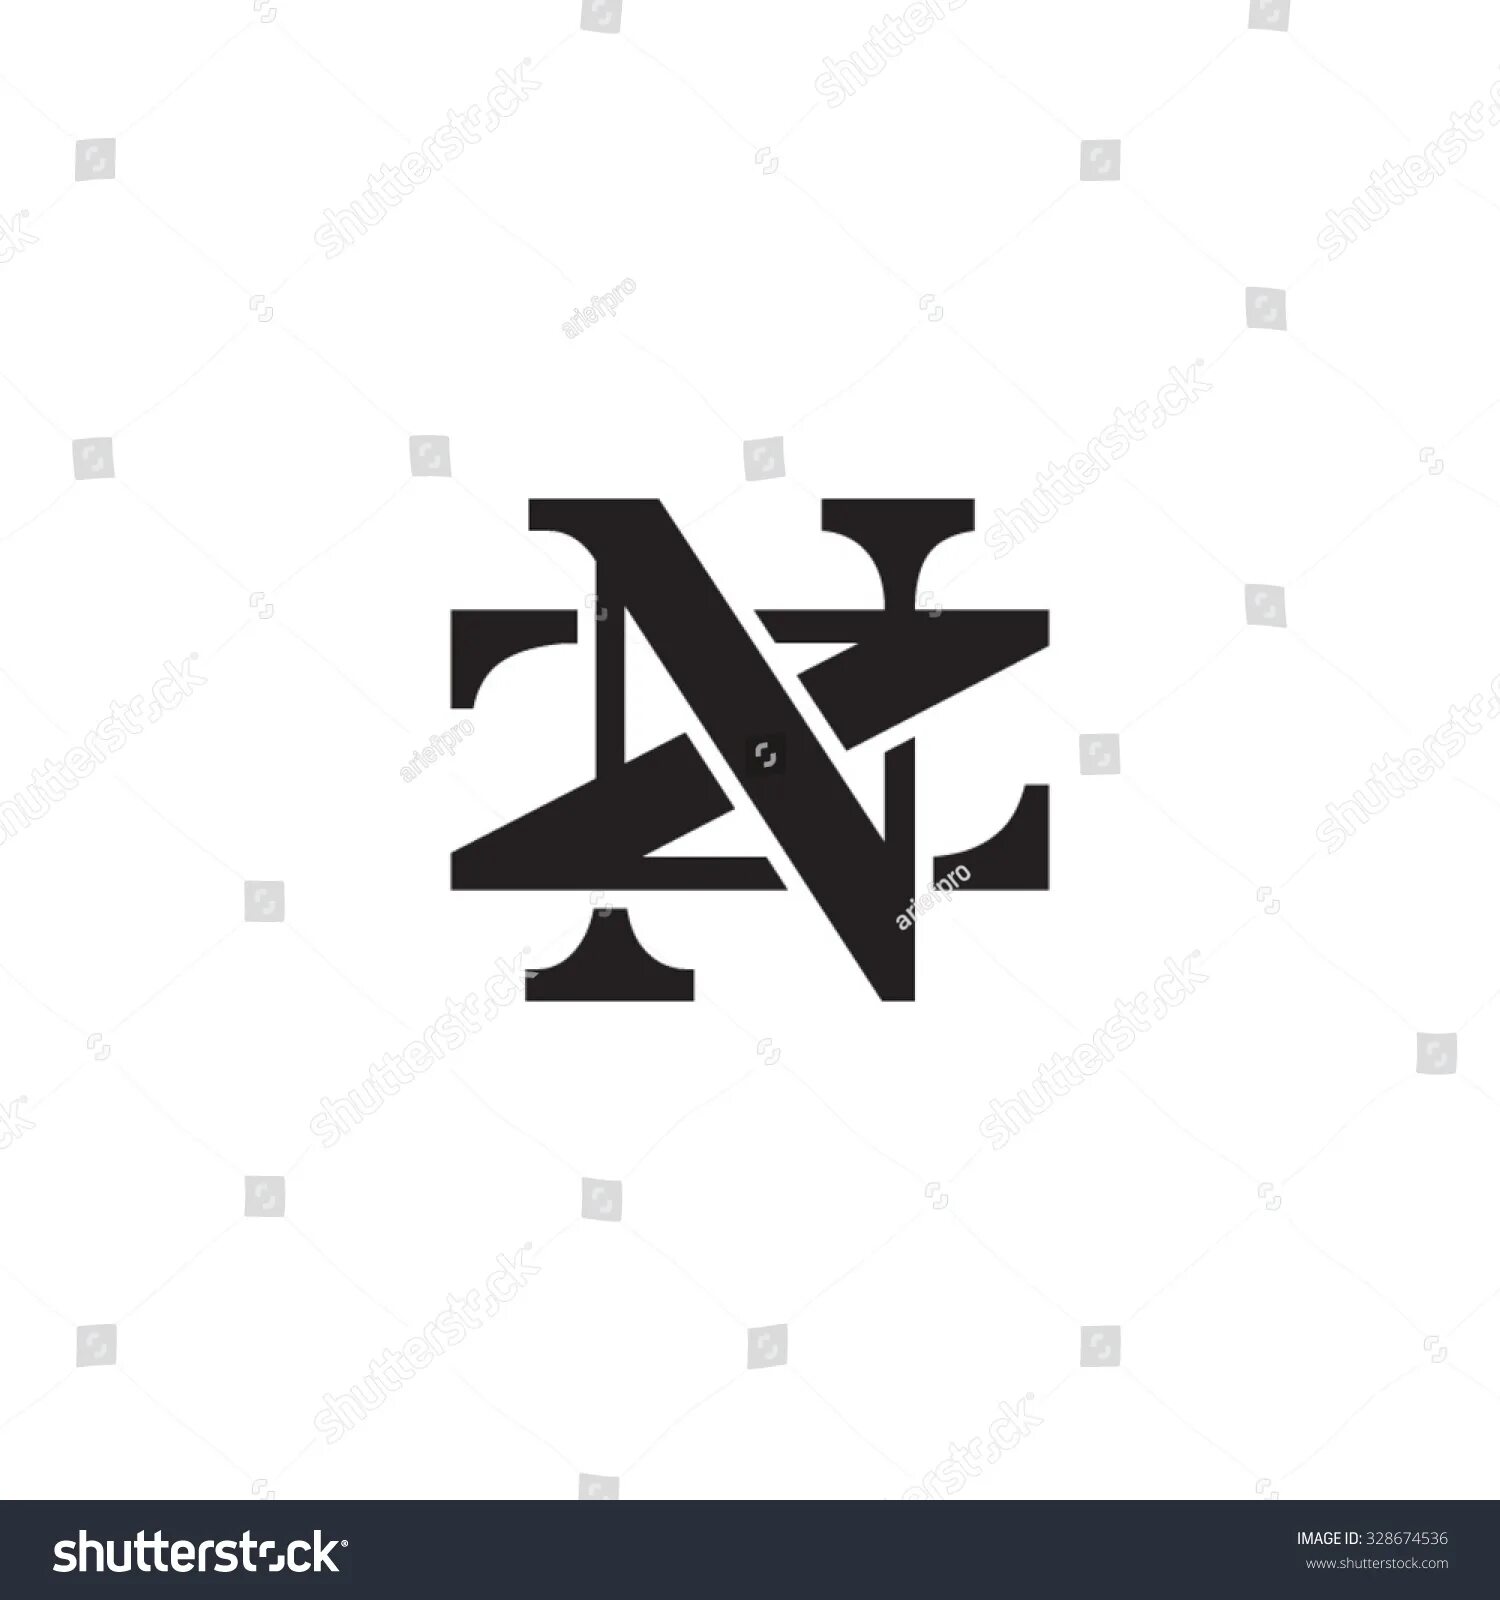 W zn. Логотип nz. Монограмма НЗ. Nz логотип белый. ZN аватарка.